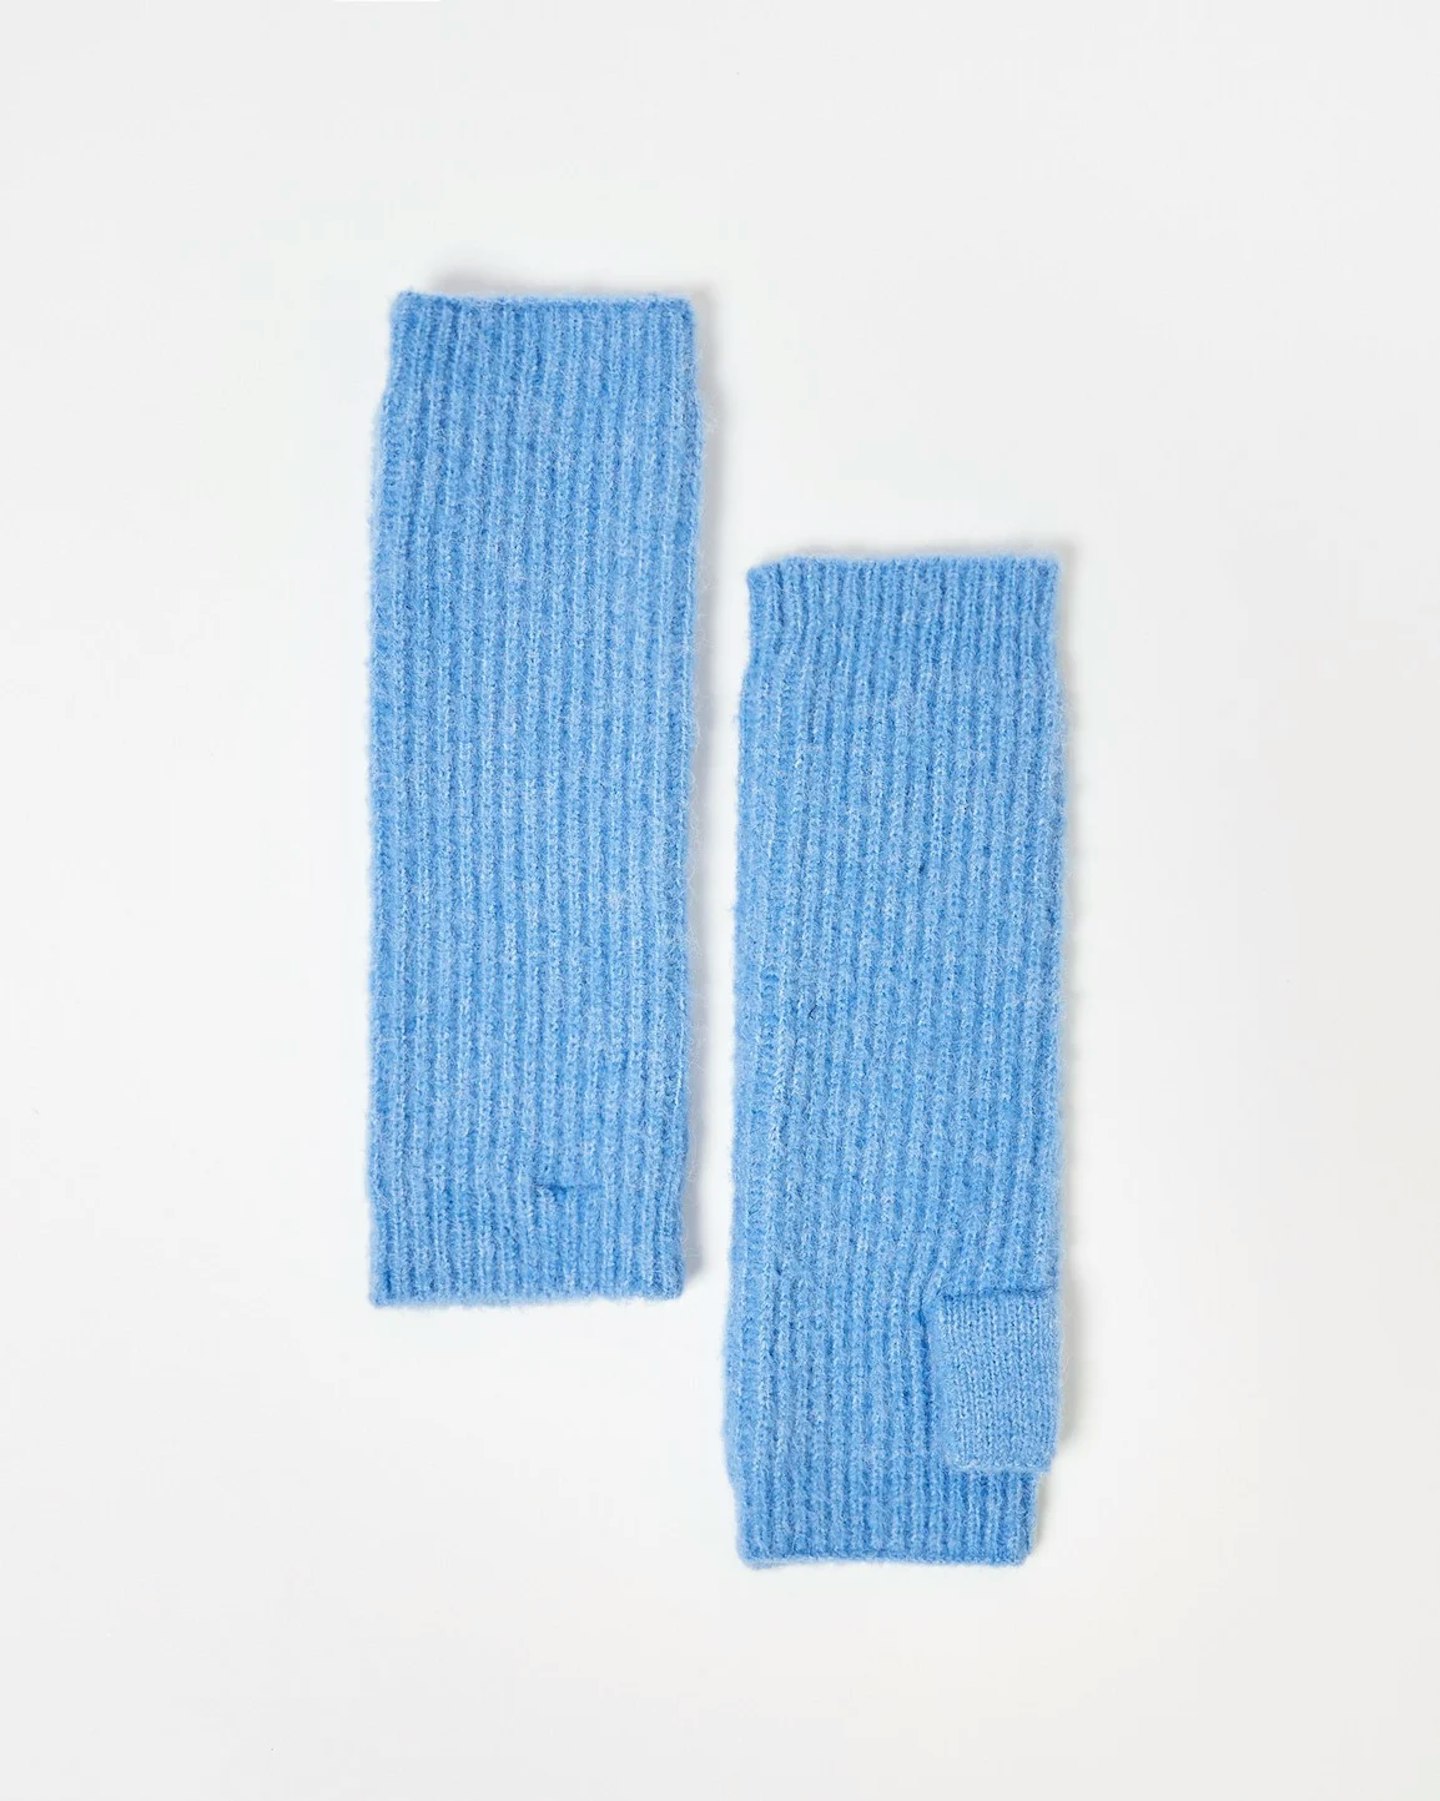 Oliver Bonas, Long Blue Wrist Warmer Knitted Gloves